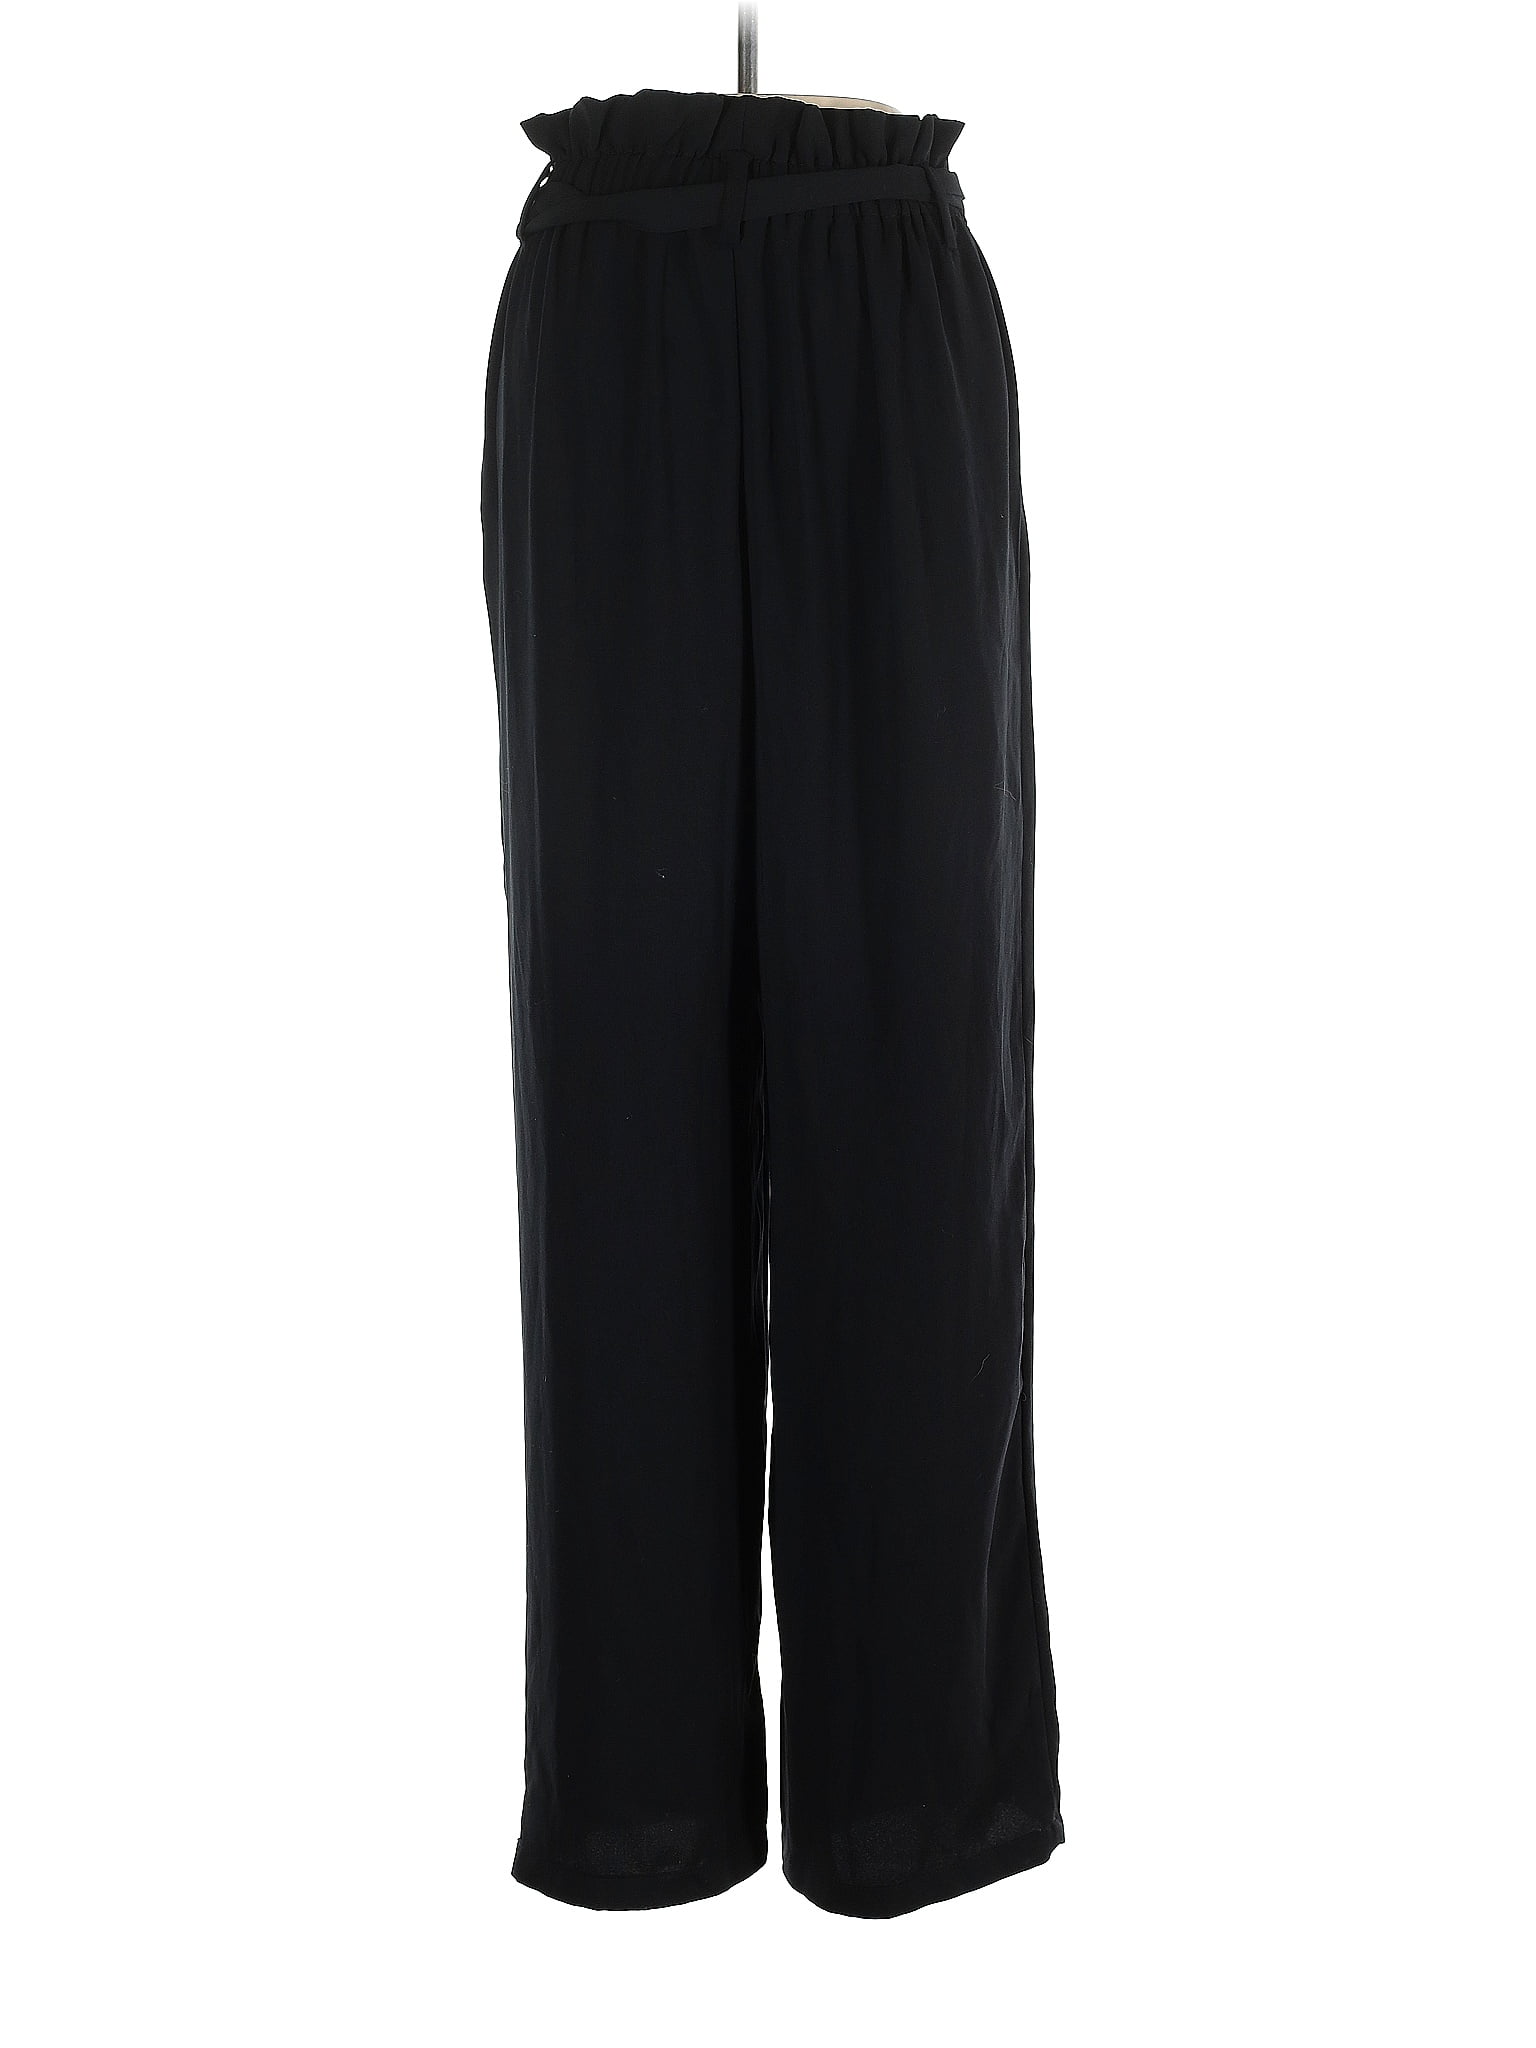 A New Day Black Dress Pants Size 10 (Petite) - 55% off